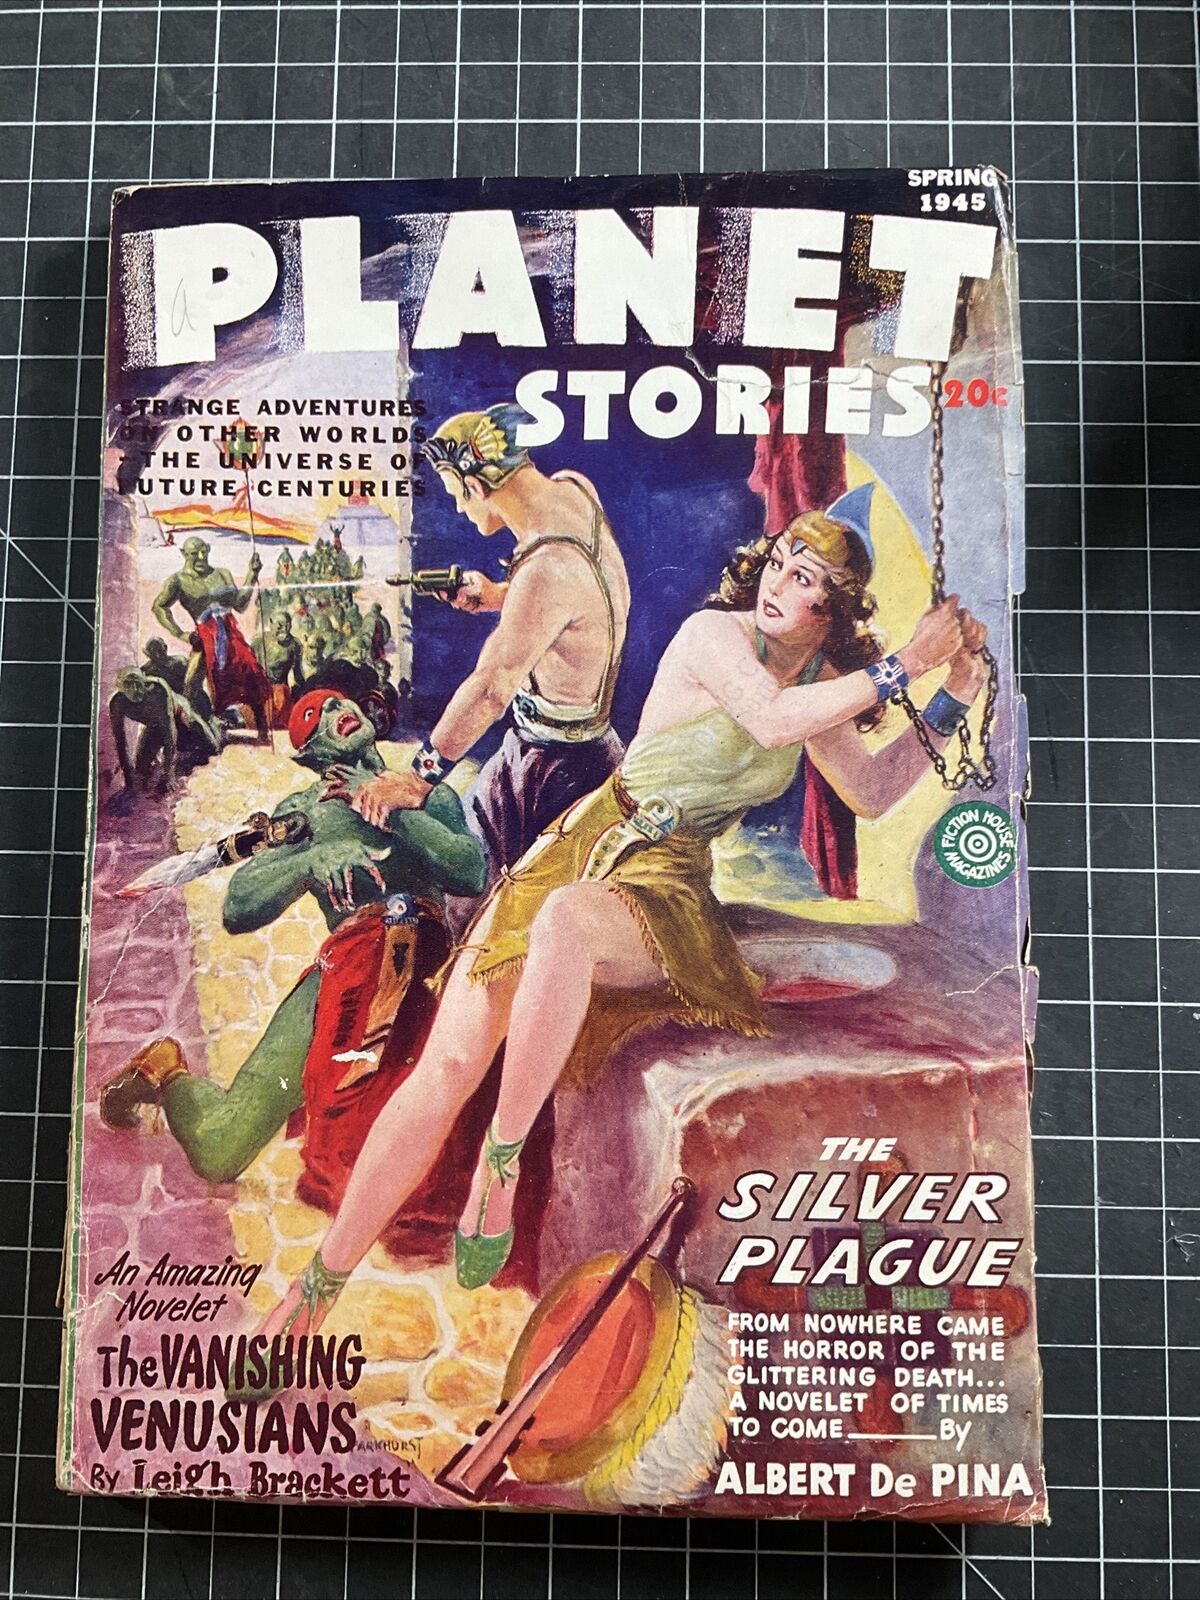 Planet Stories 1945 Spring.  The Vanishing Venusians by Leigh Brackett.  Pulp